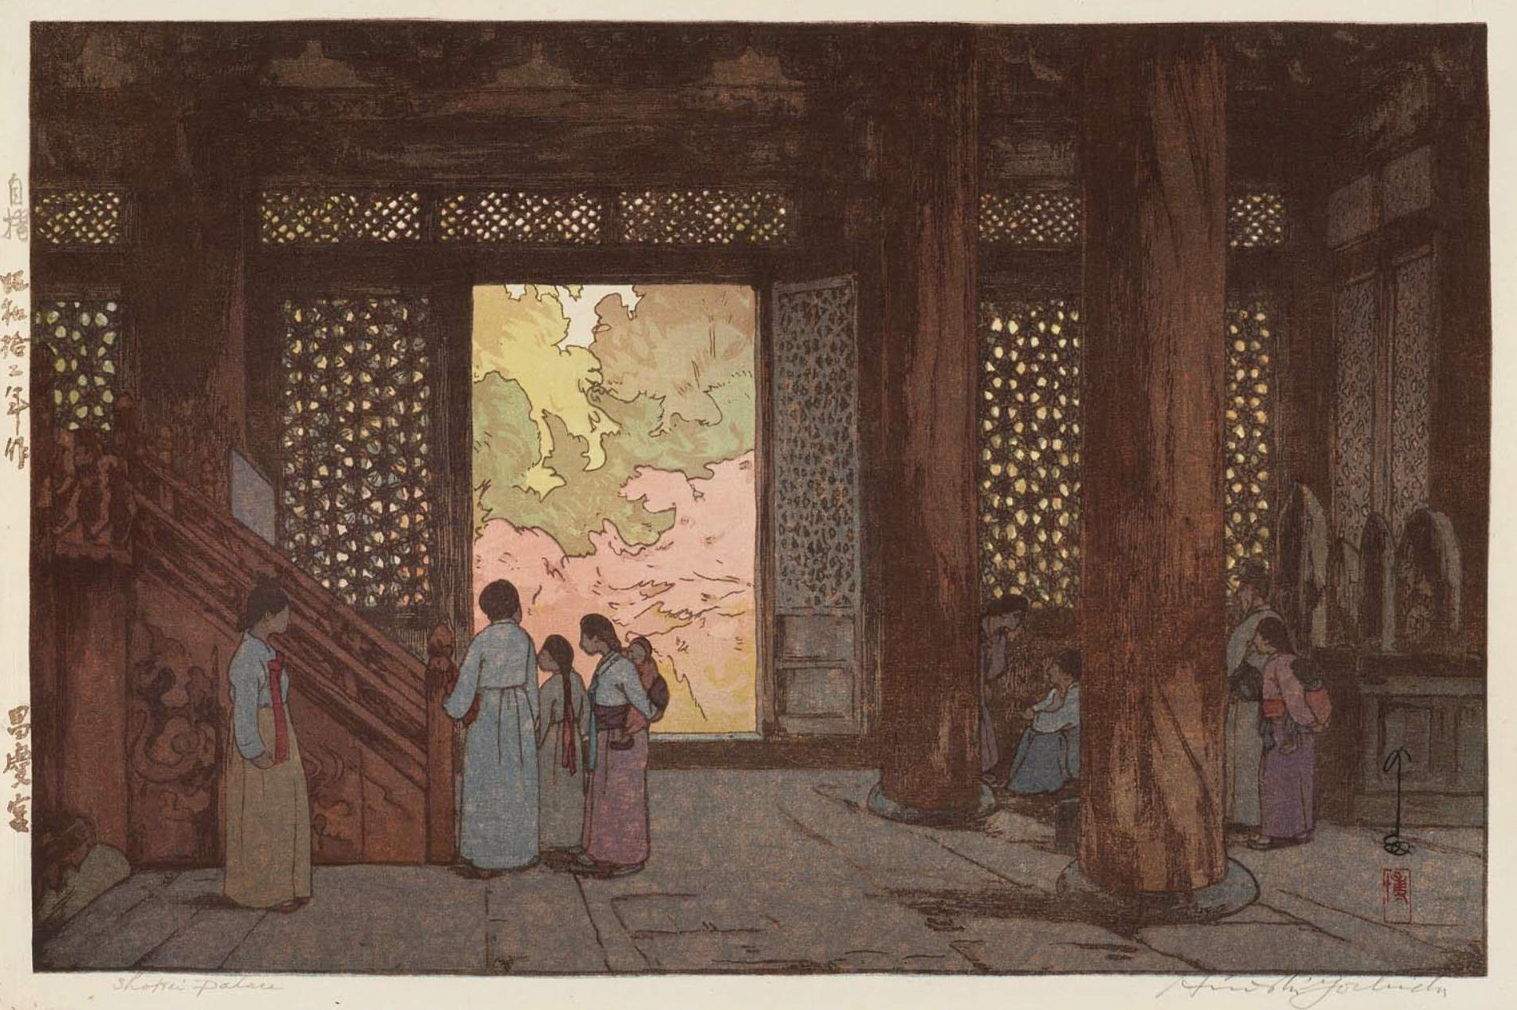 Hiroshi Yoshida “Shokei Palace” 1937 woodblock print